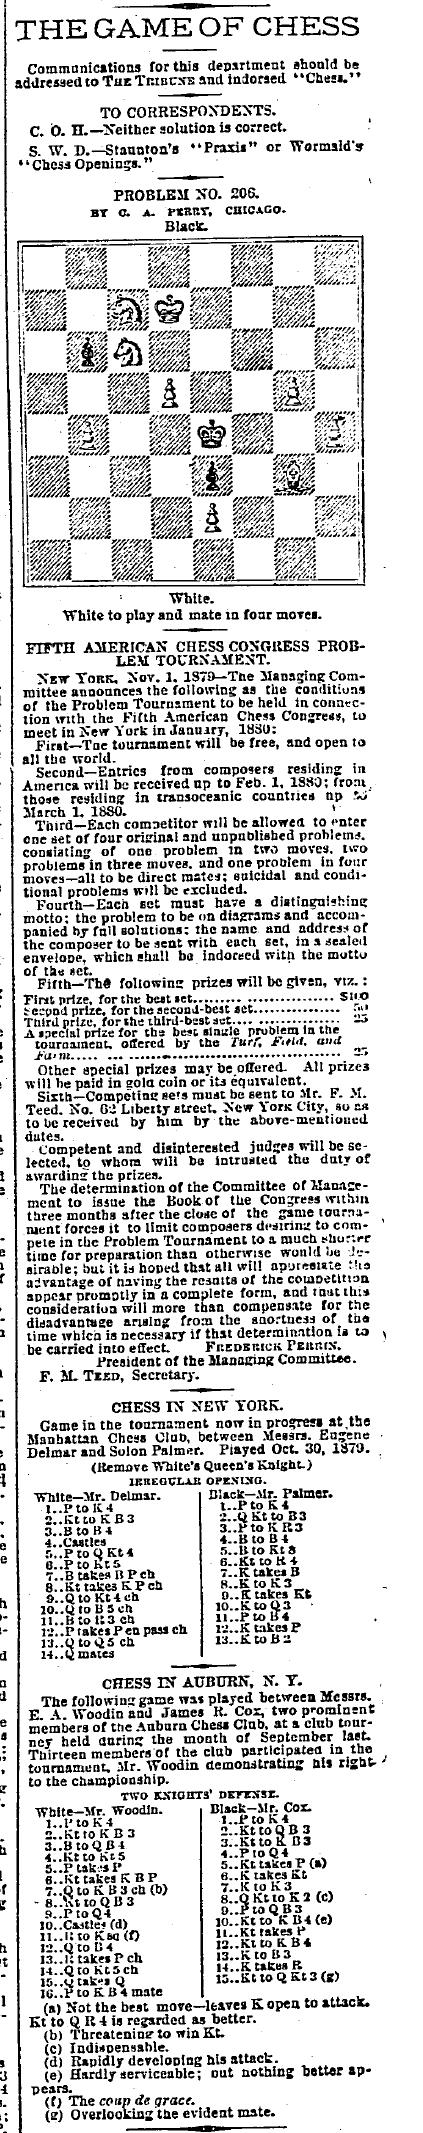 1879.11.23-01 Chicago Tribune.jpg